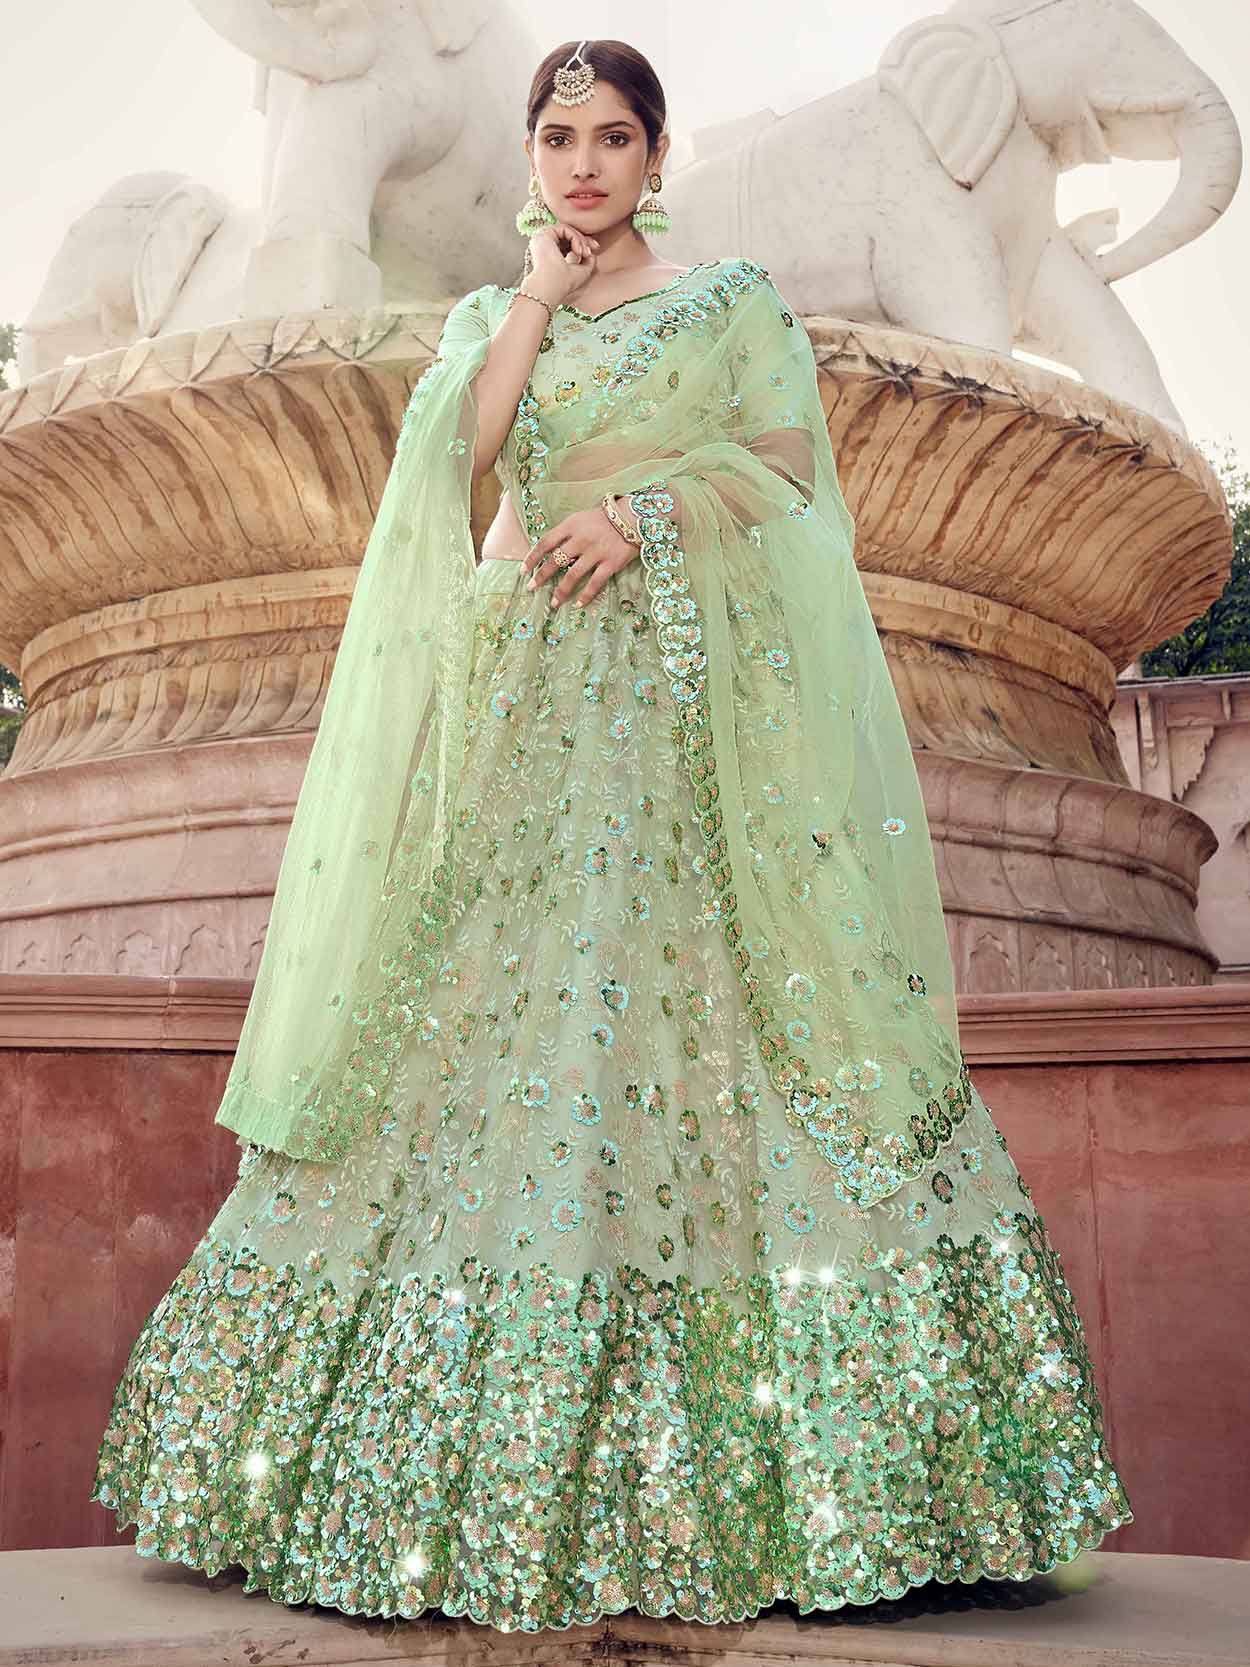 Mehendi Green Color Wedding Lehenga | Indian bridal lehenga, Indian wedding  outfits, Indian wedding dress